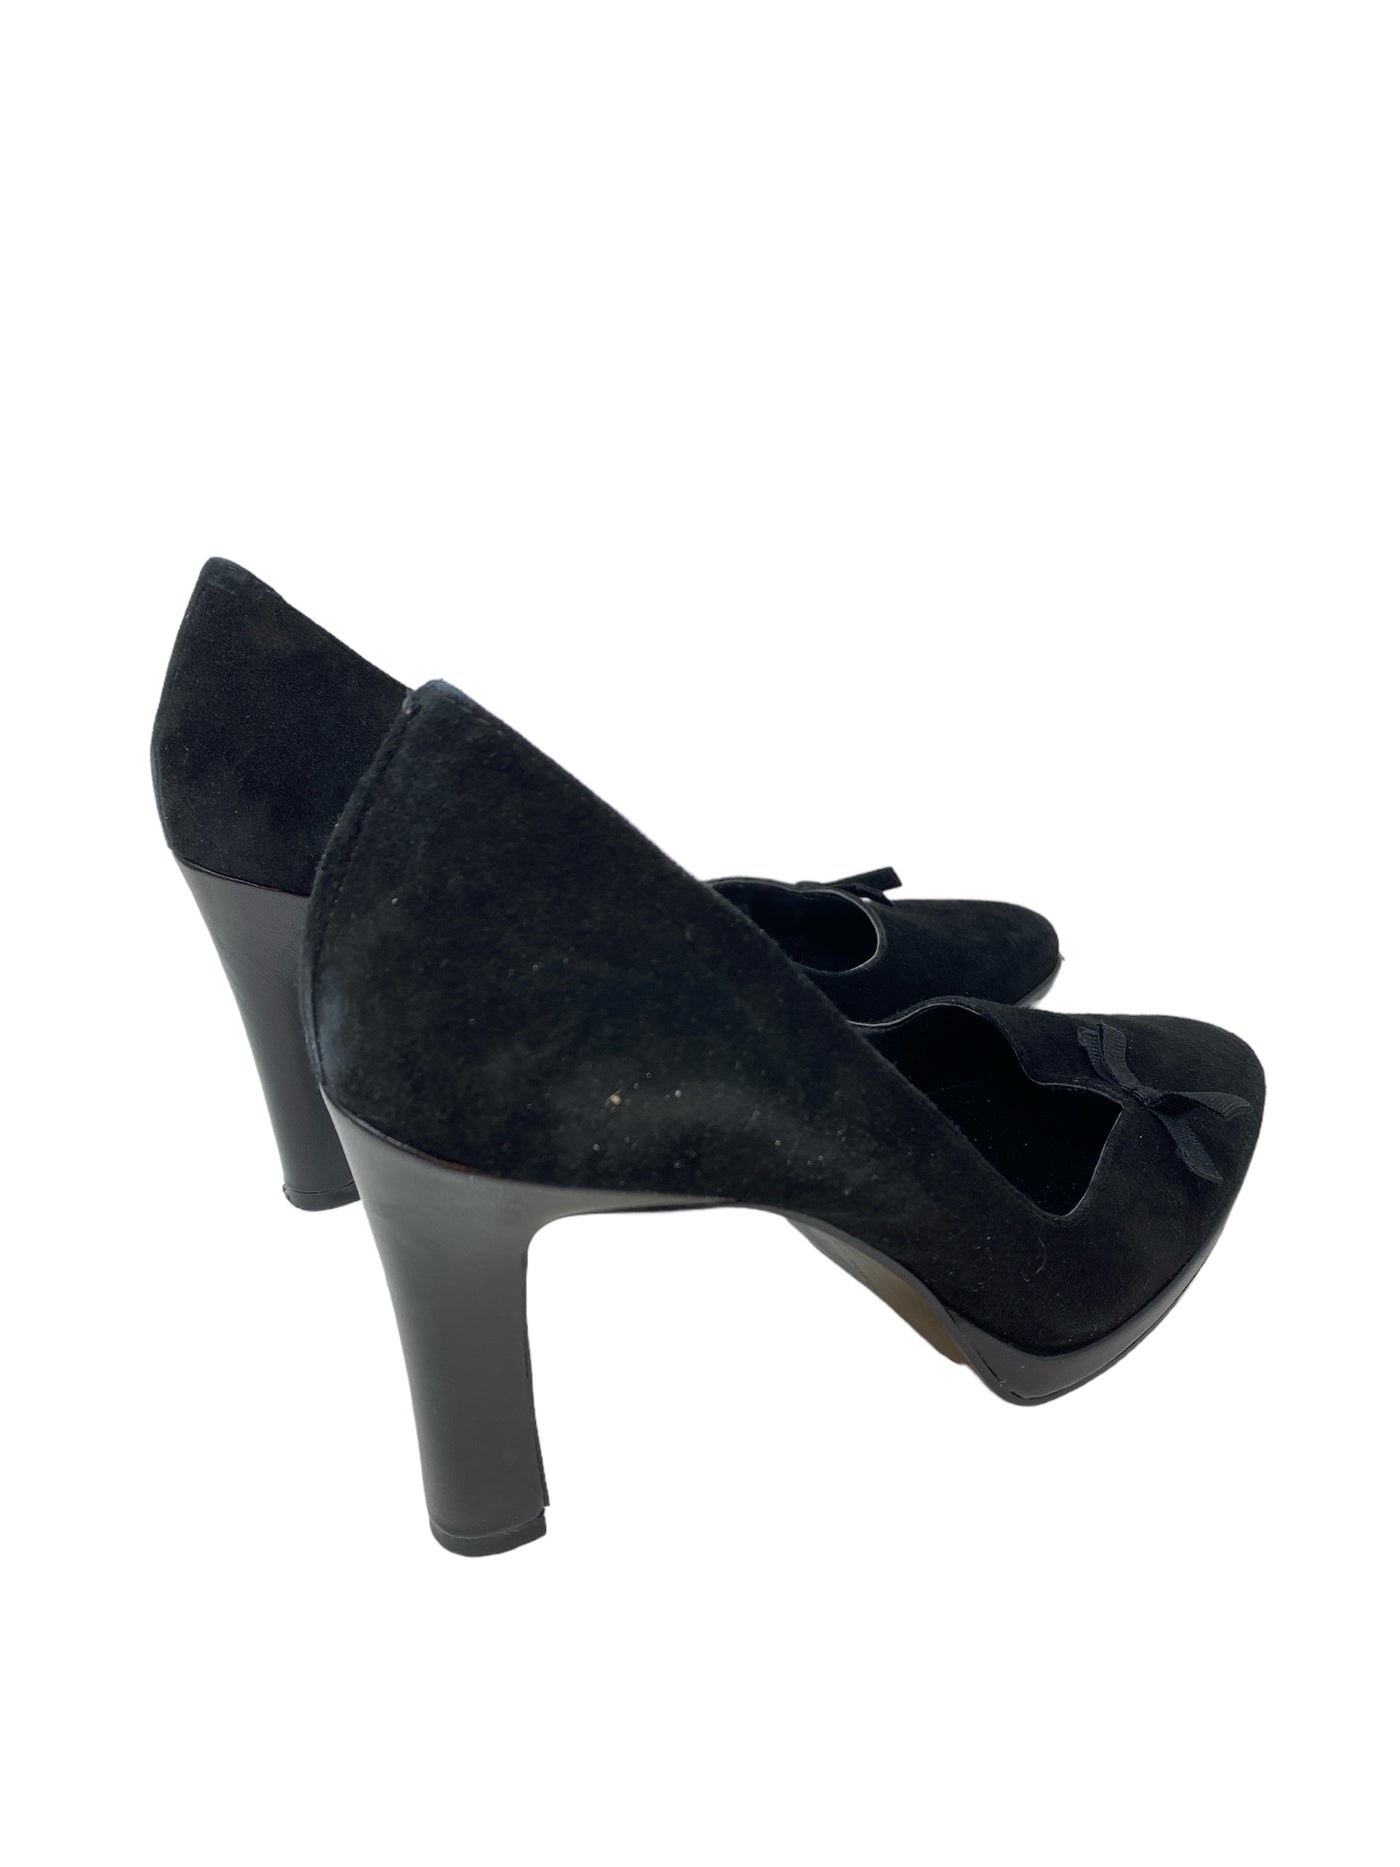 Bandolino Women Size 11 Black Heels